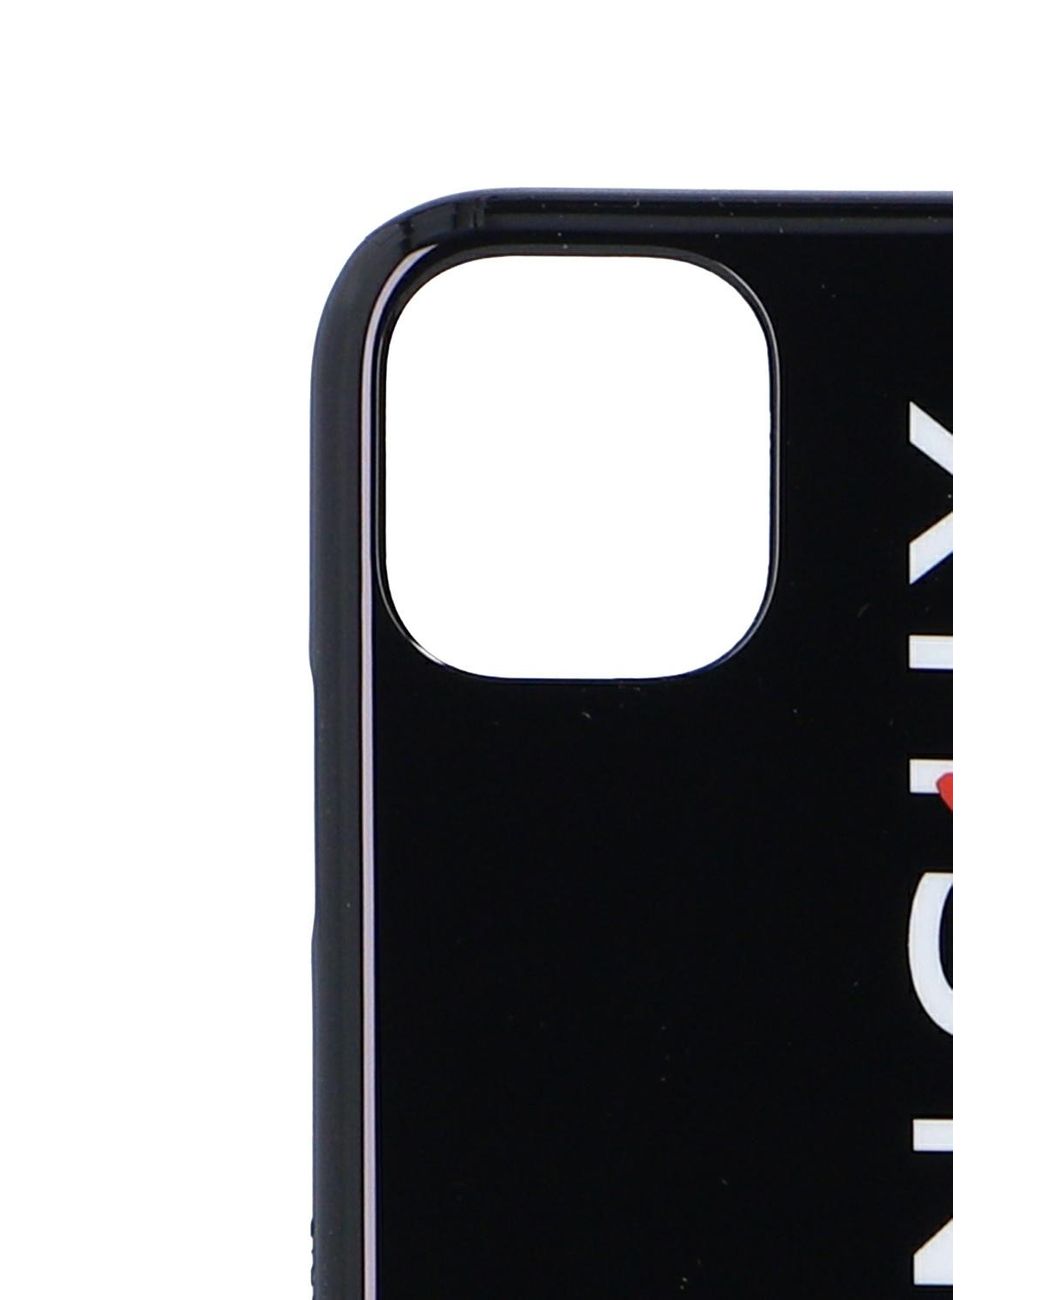 Givenchy Iphone 11 Case Unisex Black | Lyst